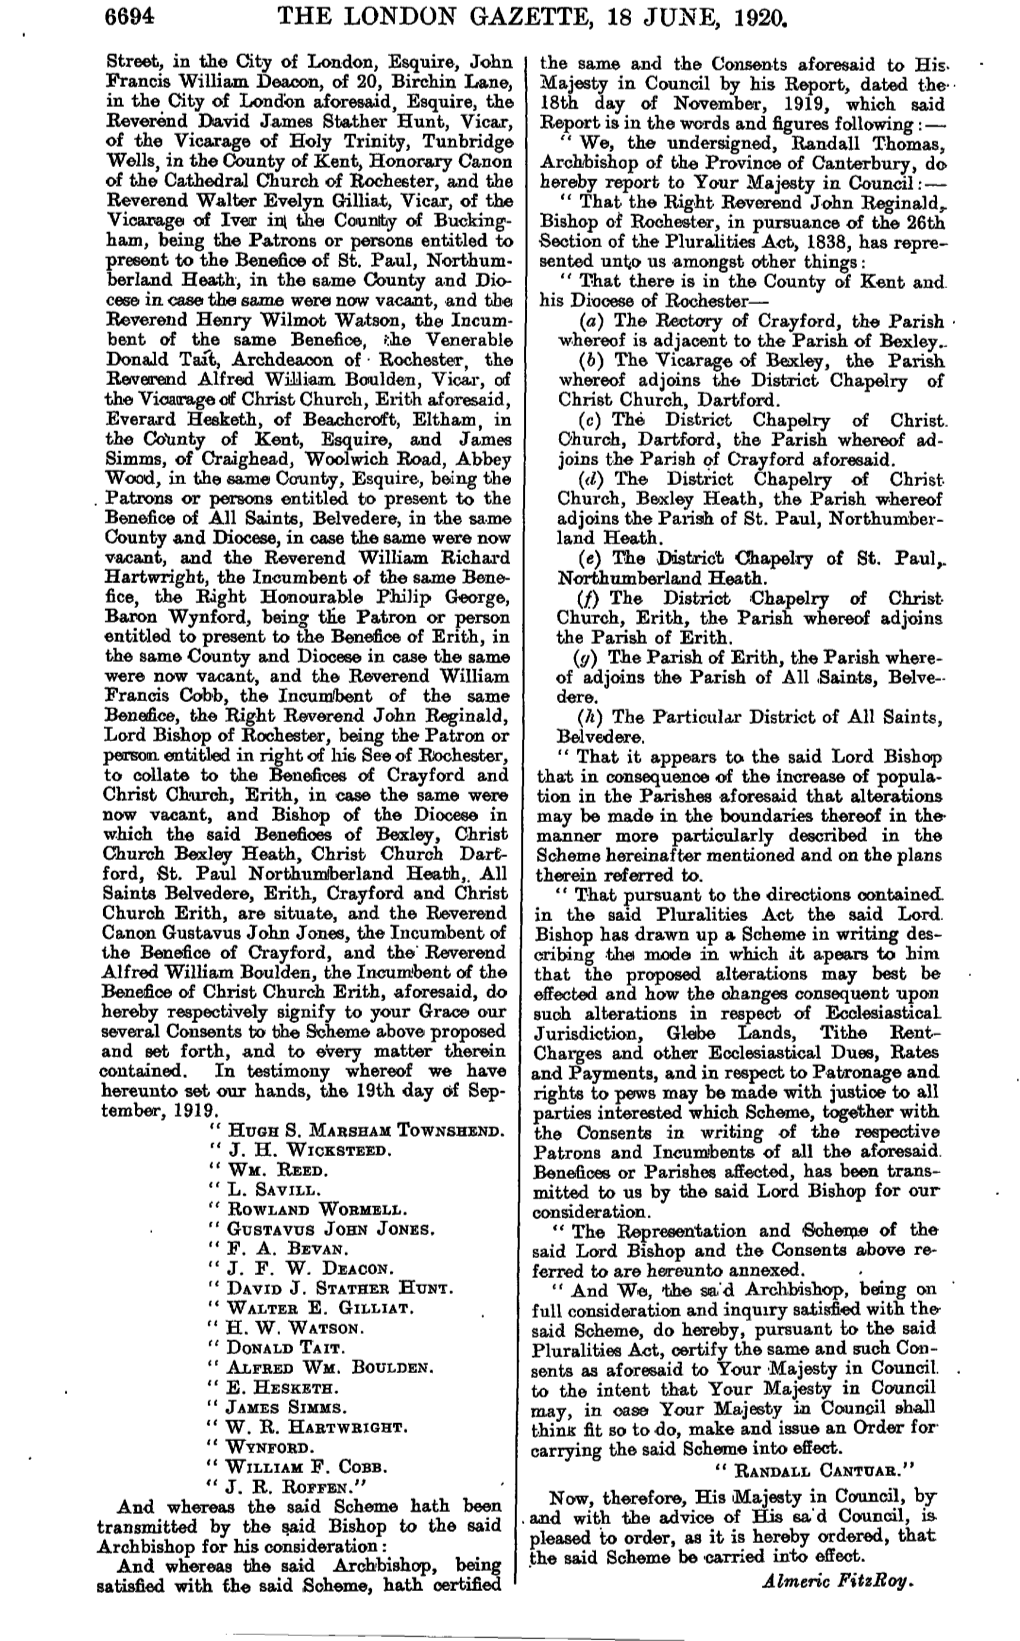 The London Gazette, 18 June, 1920